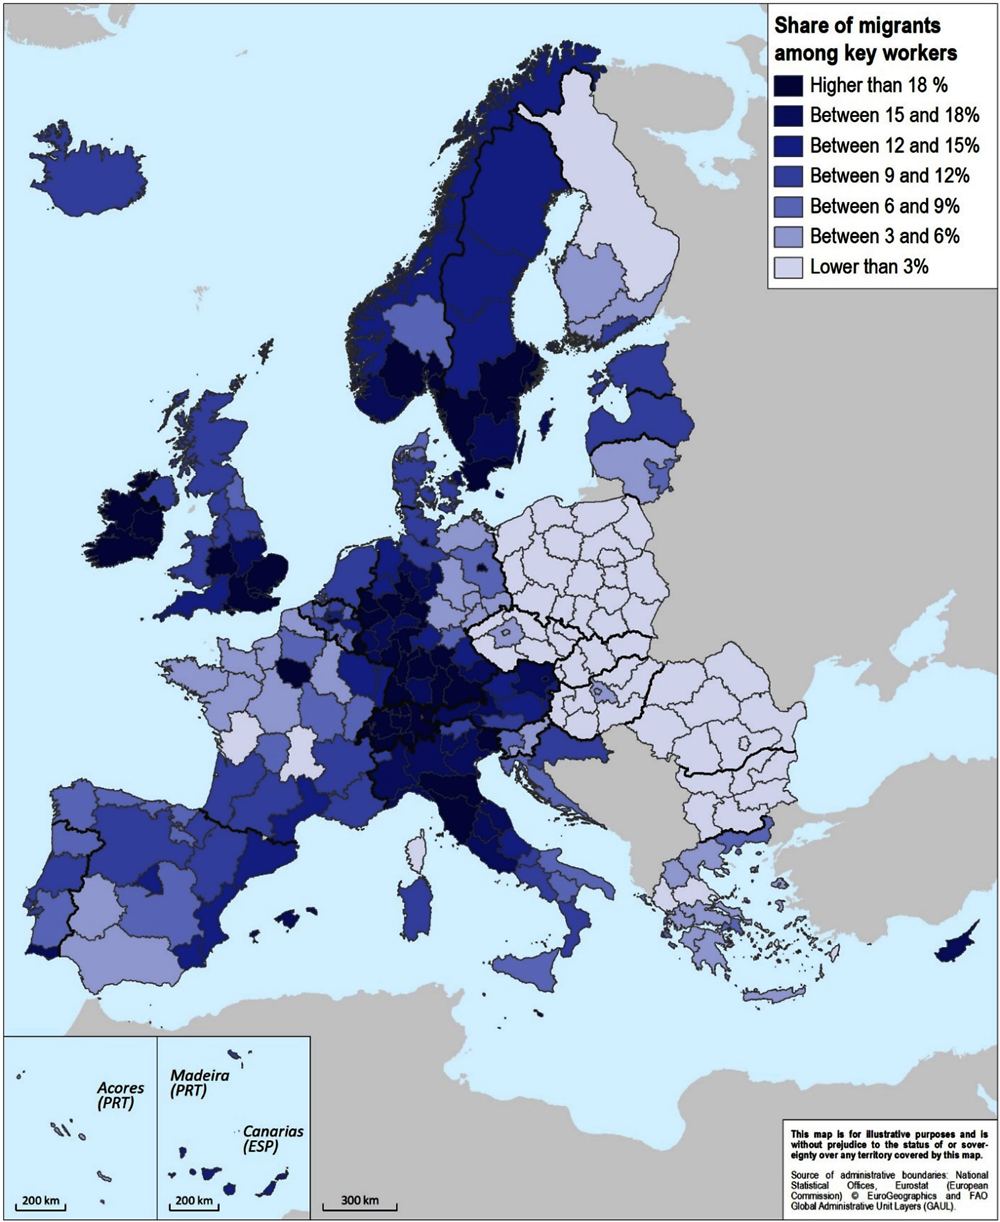 Figure 3.8. Migrant key workers across European regions, 2019